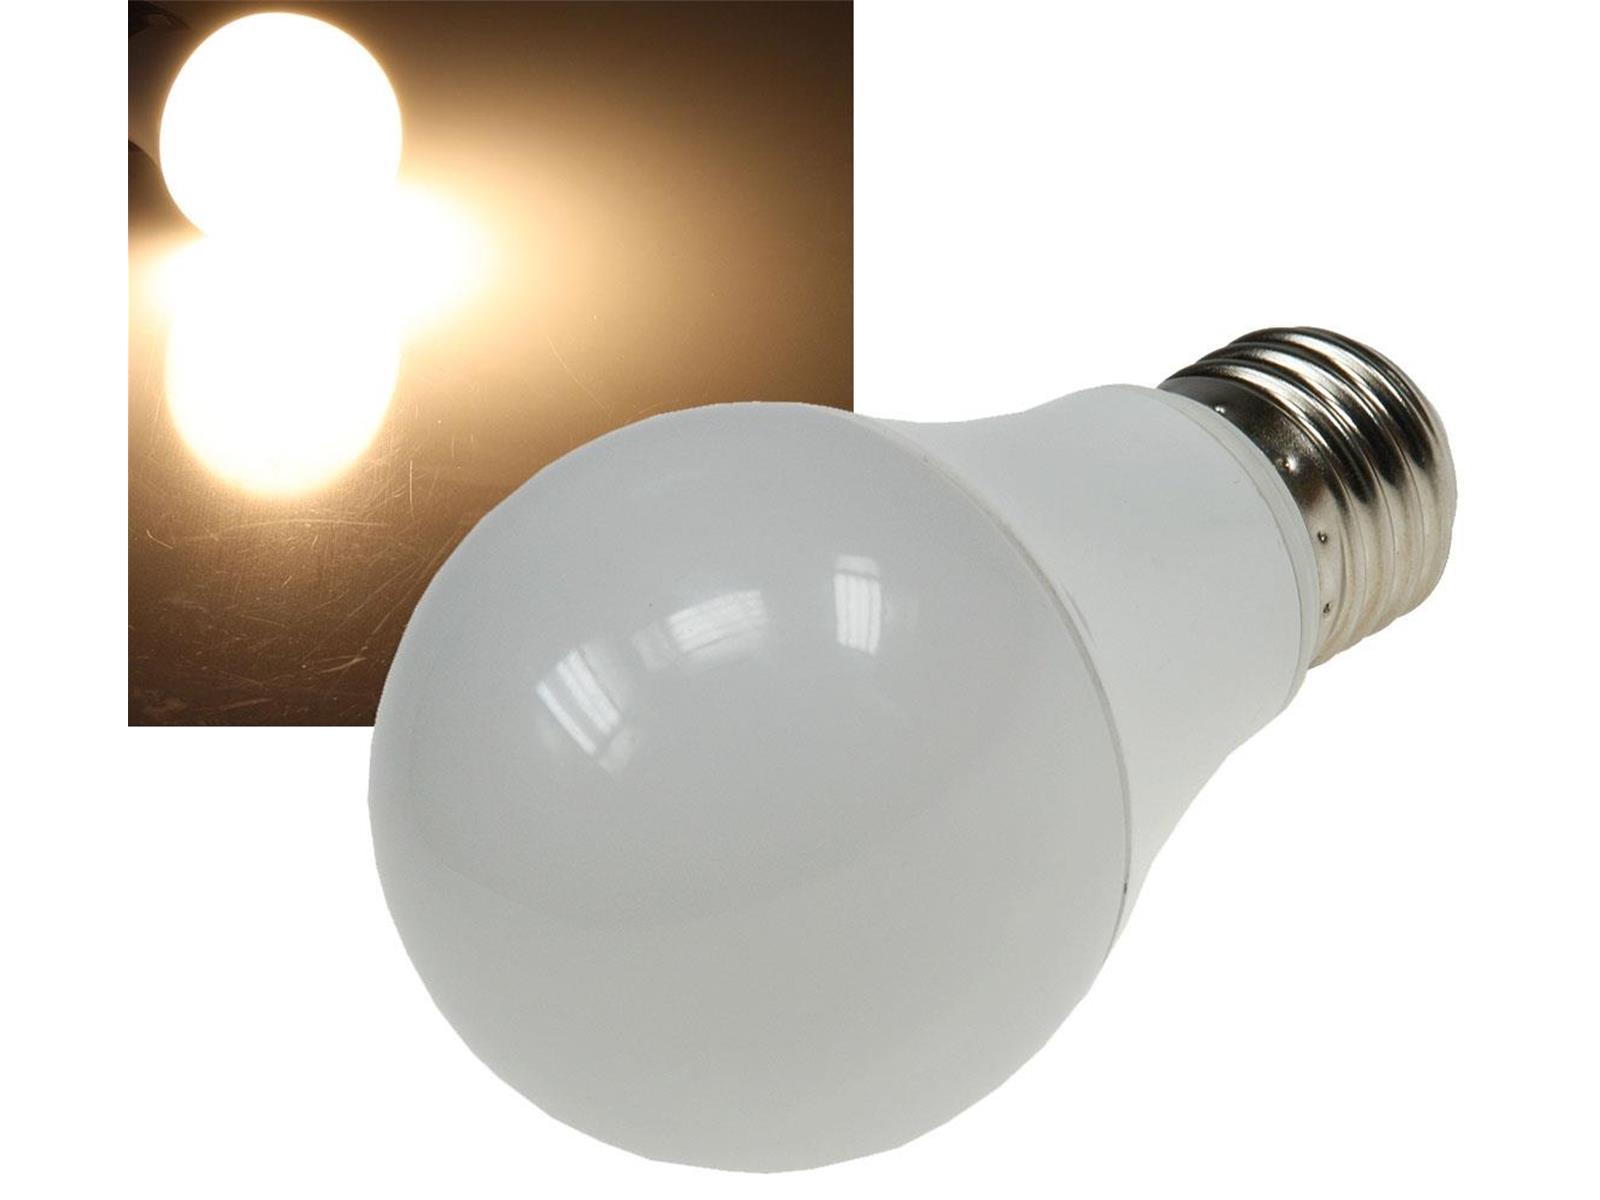 LED Glühlampe E27 "G40 AGL" warmweiß 3000k, 500lm, 230V/5W, 160°